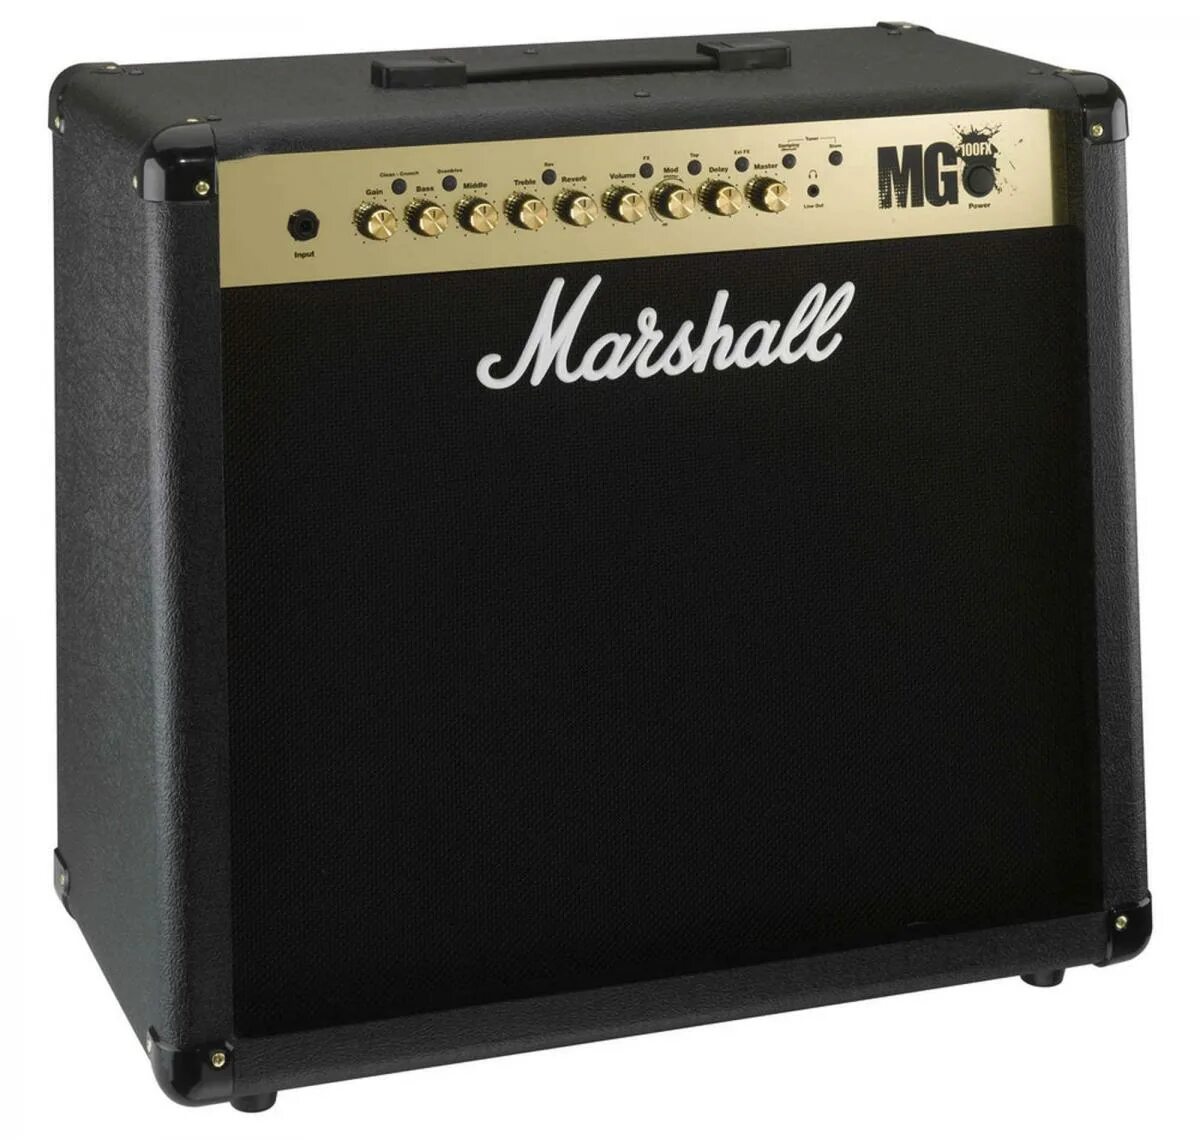 Маршал страна производитель. Гитарный комбик Маршал 100 ватт. Marshall усилитель для гитары 100 Вт. Комбик Маршалл для электрогитары. Комбоусилитель для электрогитары Маршал.